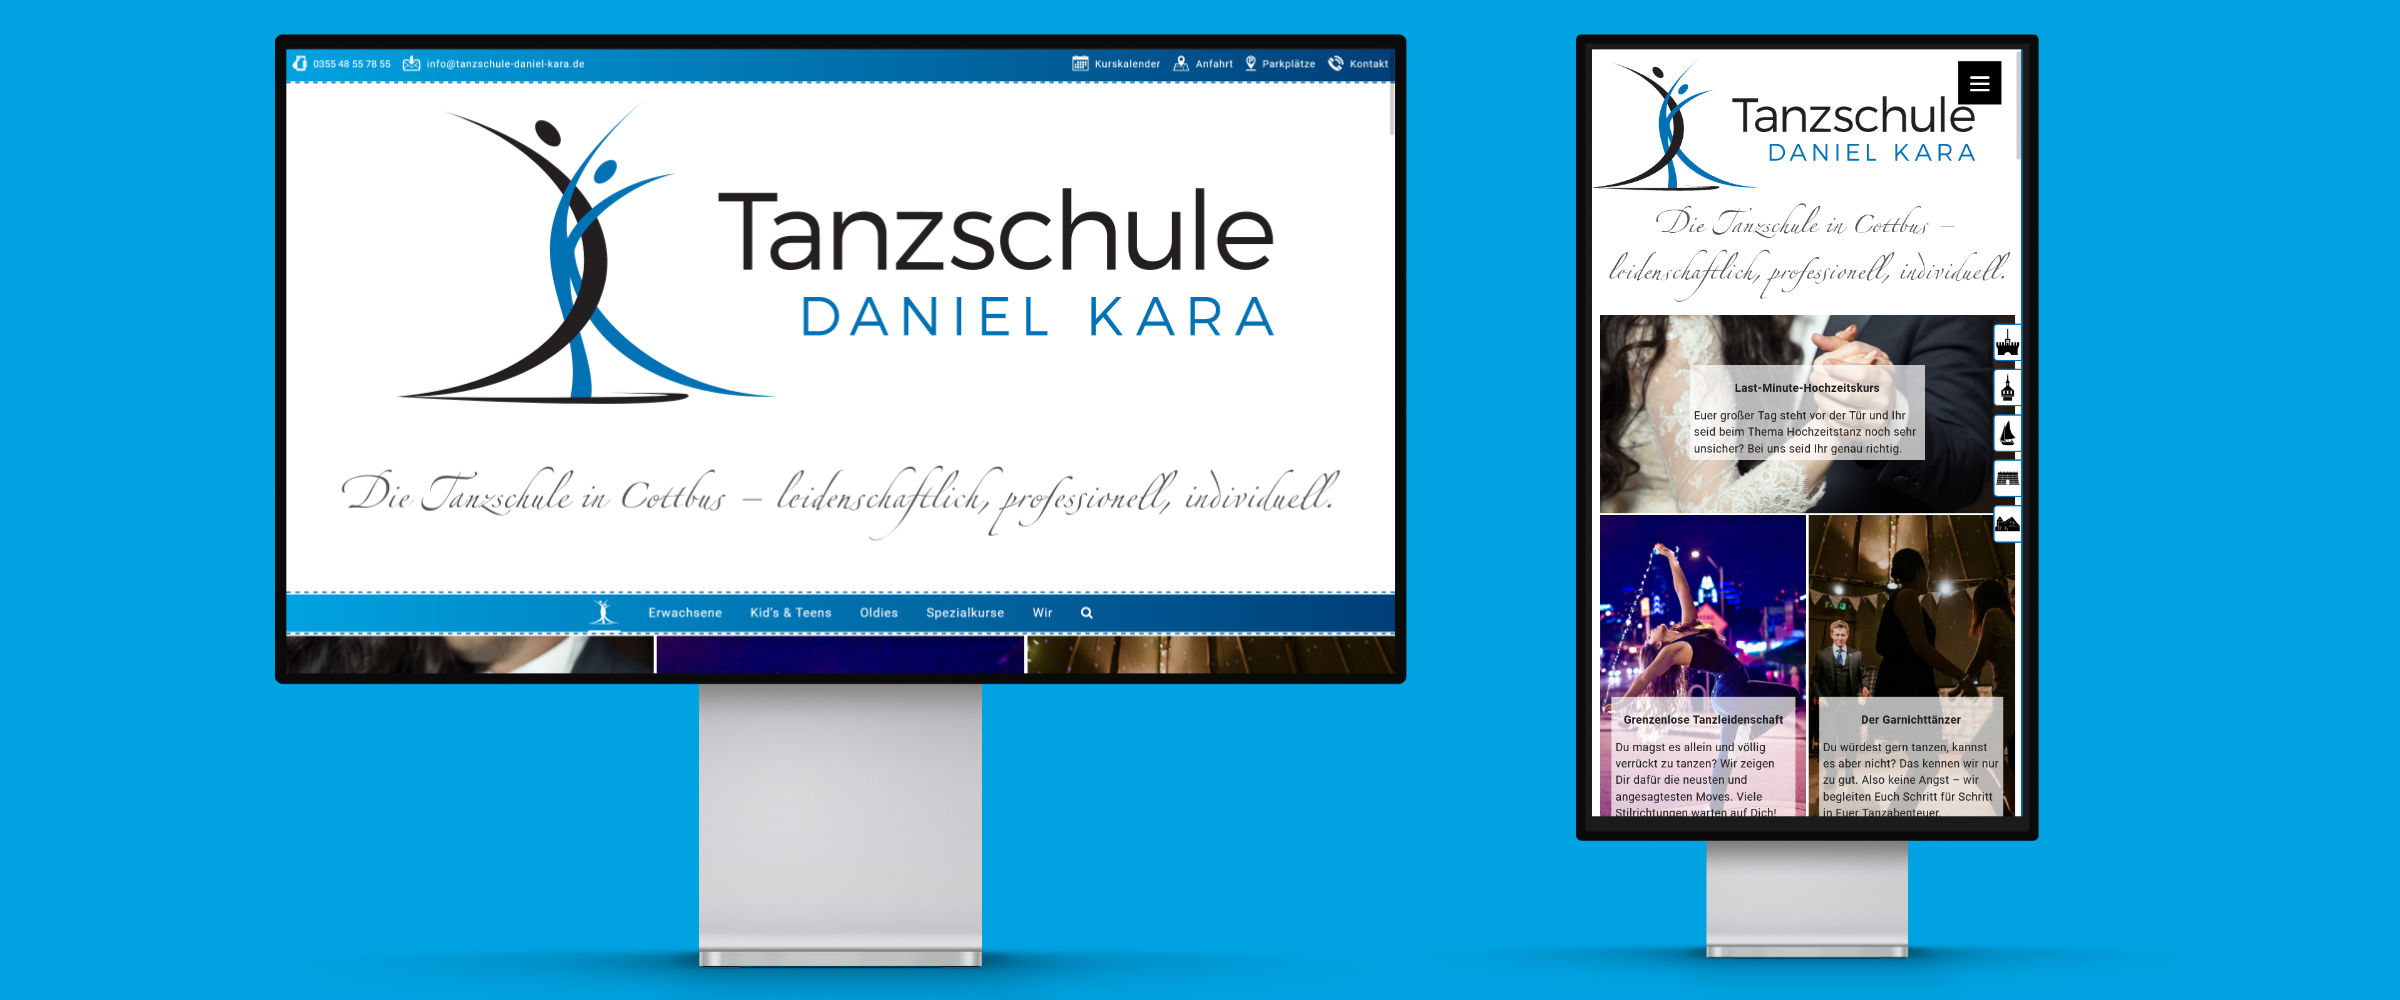 kiko kreativagentur - Projekt Tanzschule Daniel Kara